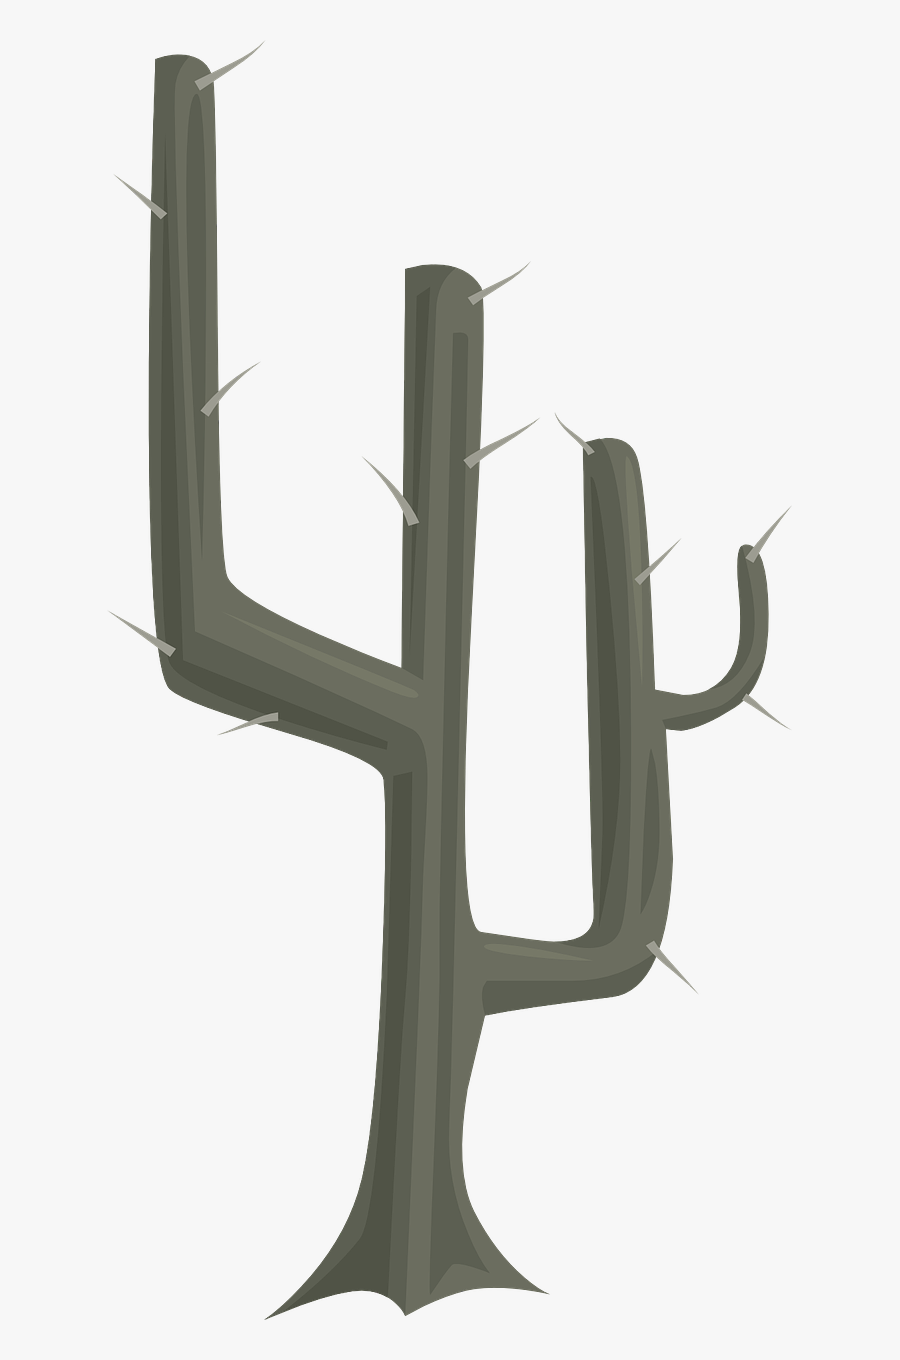 Free Download Cartoon Cactus With Flower - Cactus, Transparent Clipart